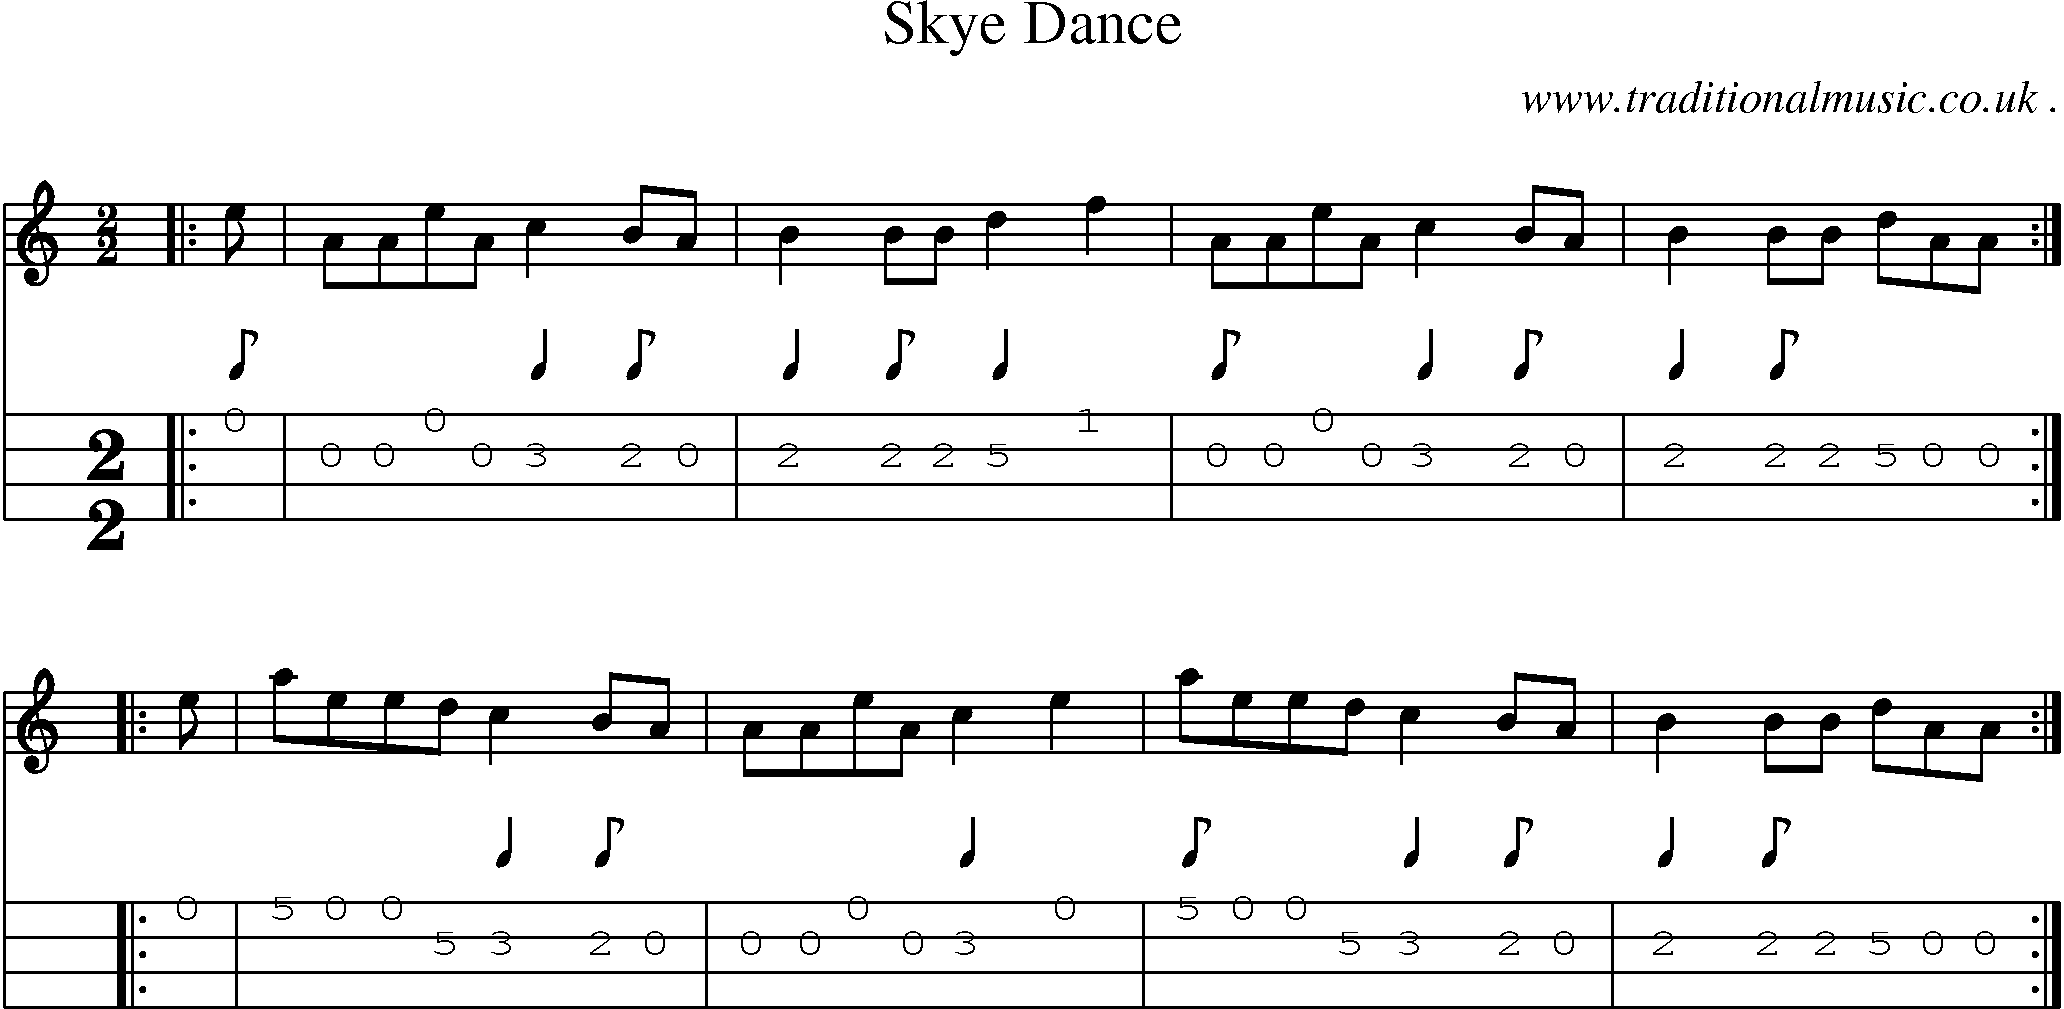 Sheet-Music and Mandolin Tabs for Skye Dance